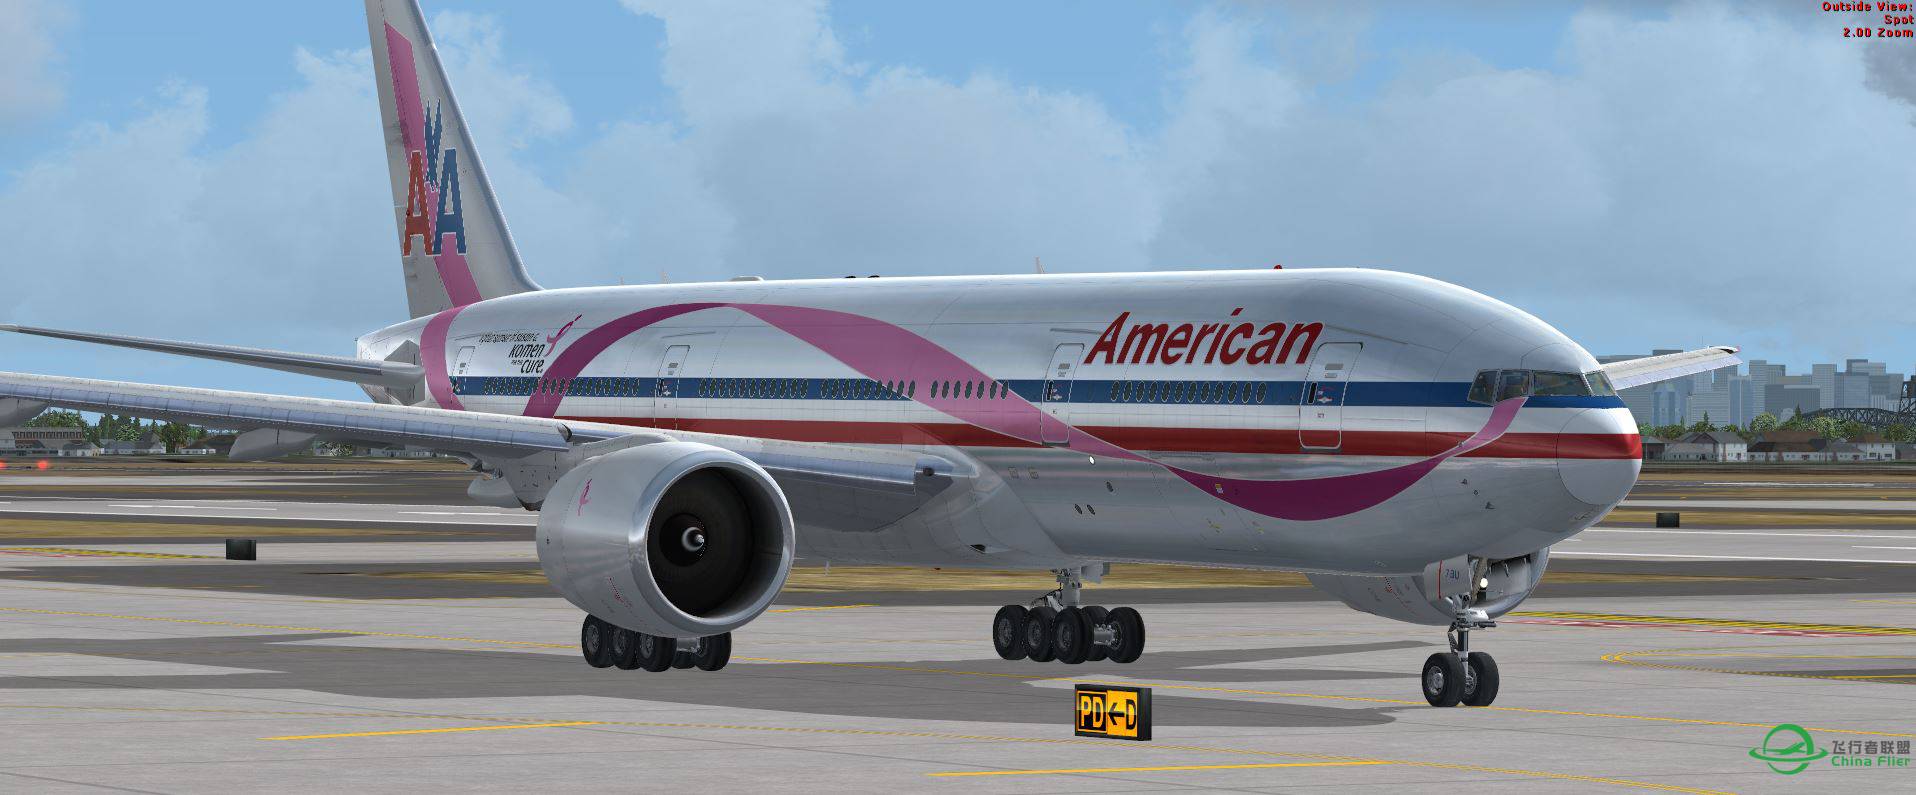 B777 American Airline-1329 